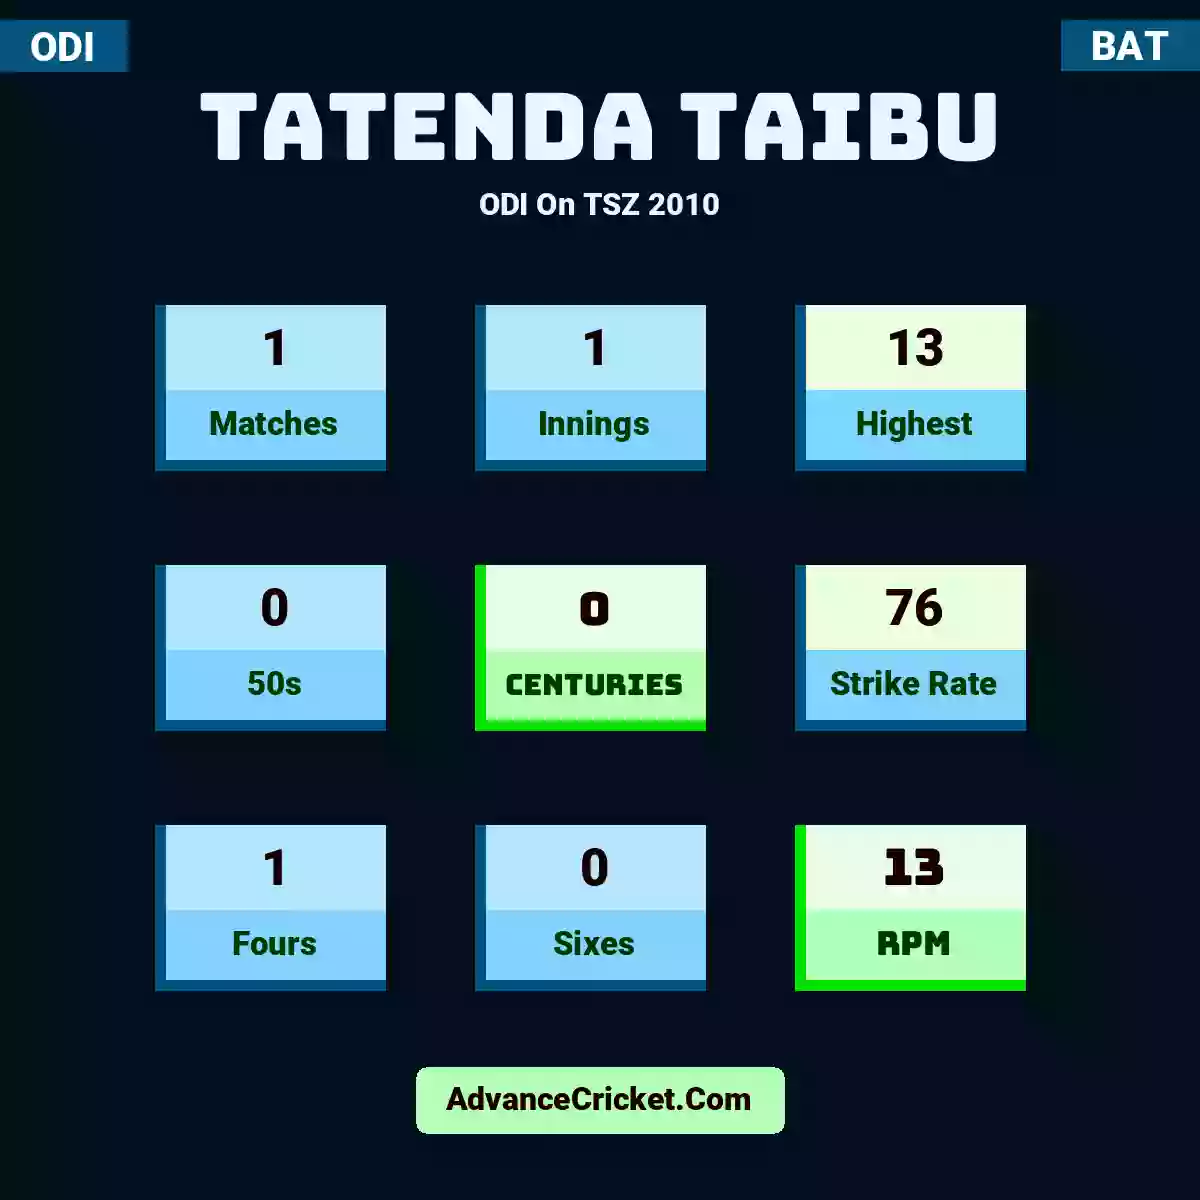 Tatenda Taibu ODI  On TSZ 2010, Tatenda Taibu played 1 matches, scored 13 runs as highest, 0 half-centuries, and 0 centuries, with a strike rate of 76. T.Taibu hit 1 fours and 0 sixes, with an RPM of 13.